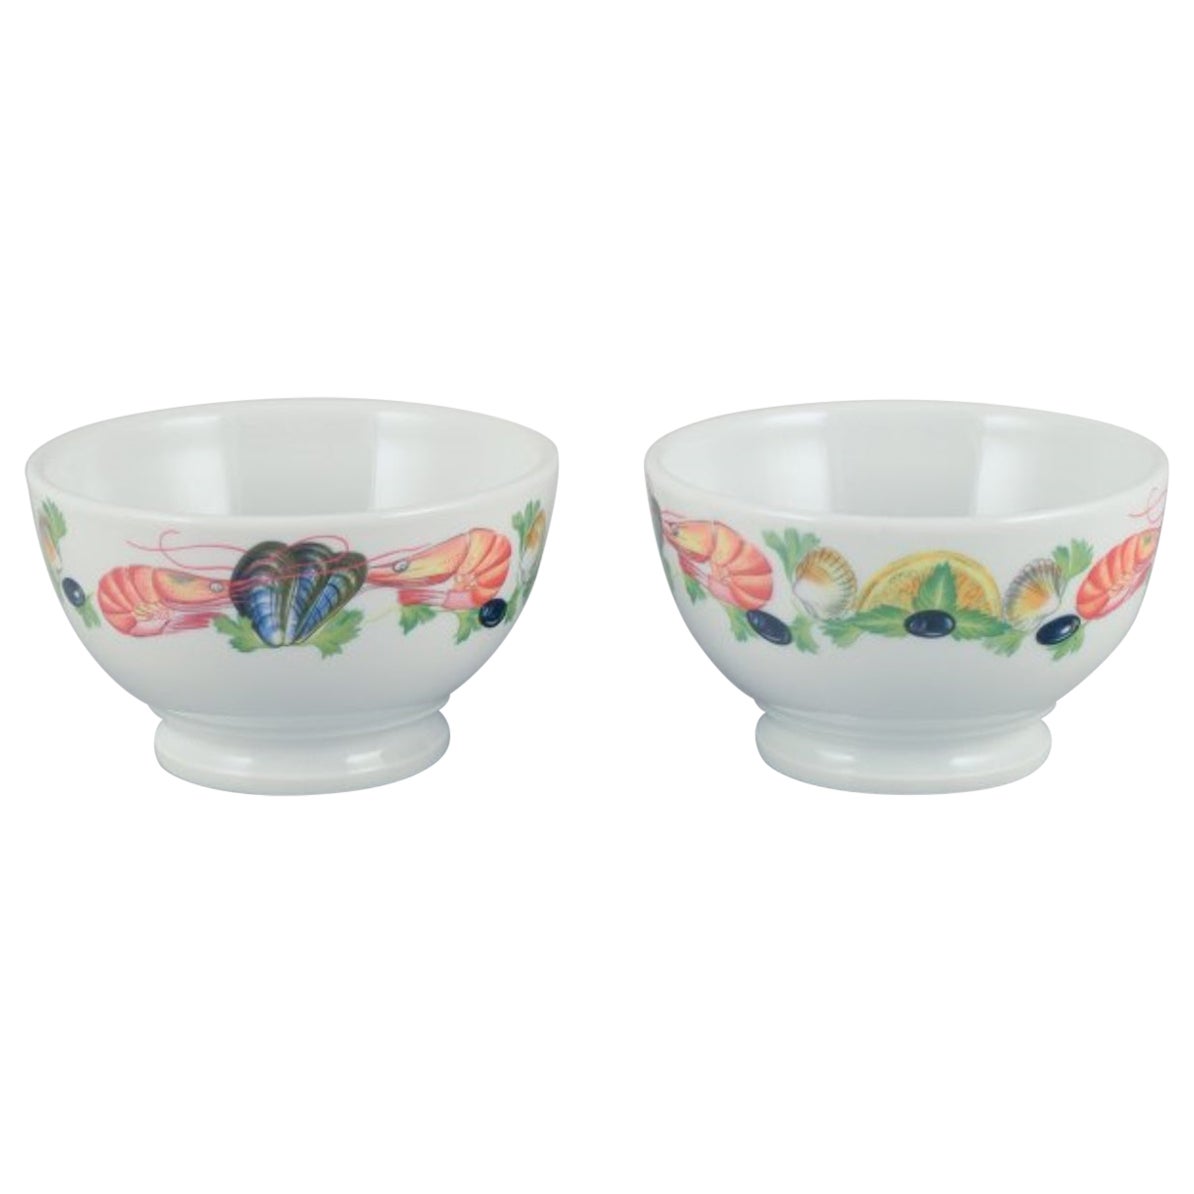 Pillivuyt, France. Set of two porcelain bowls with seafood motif. For Sale